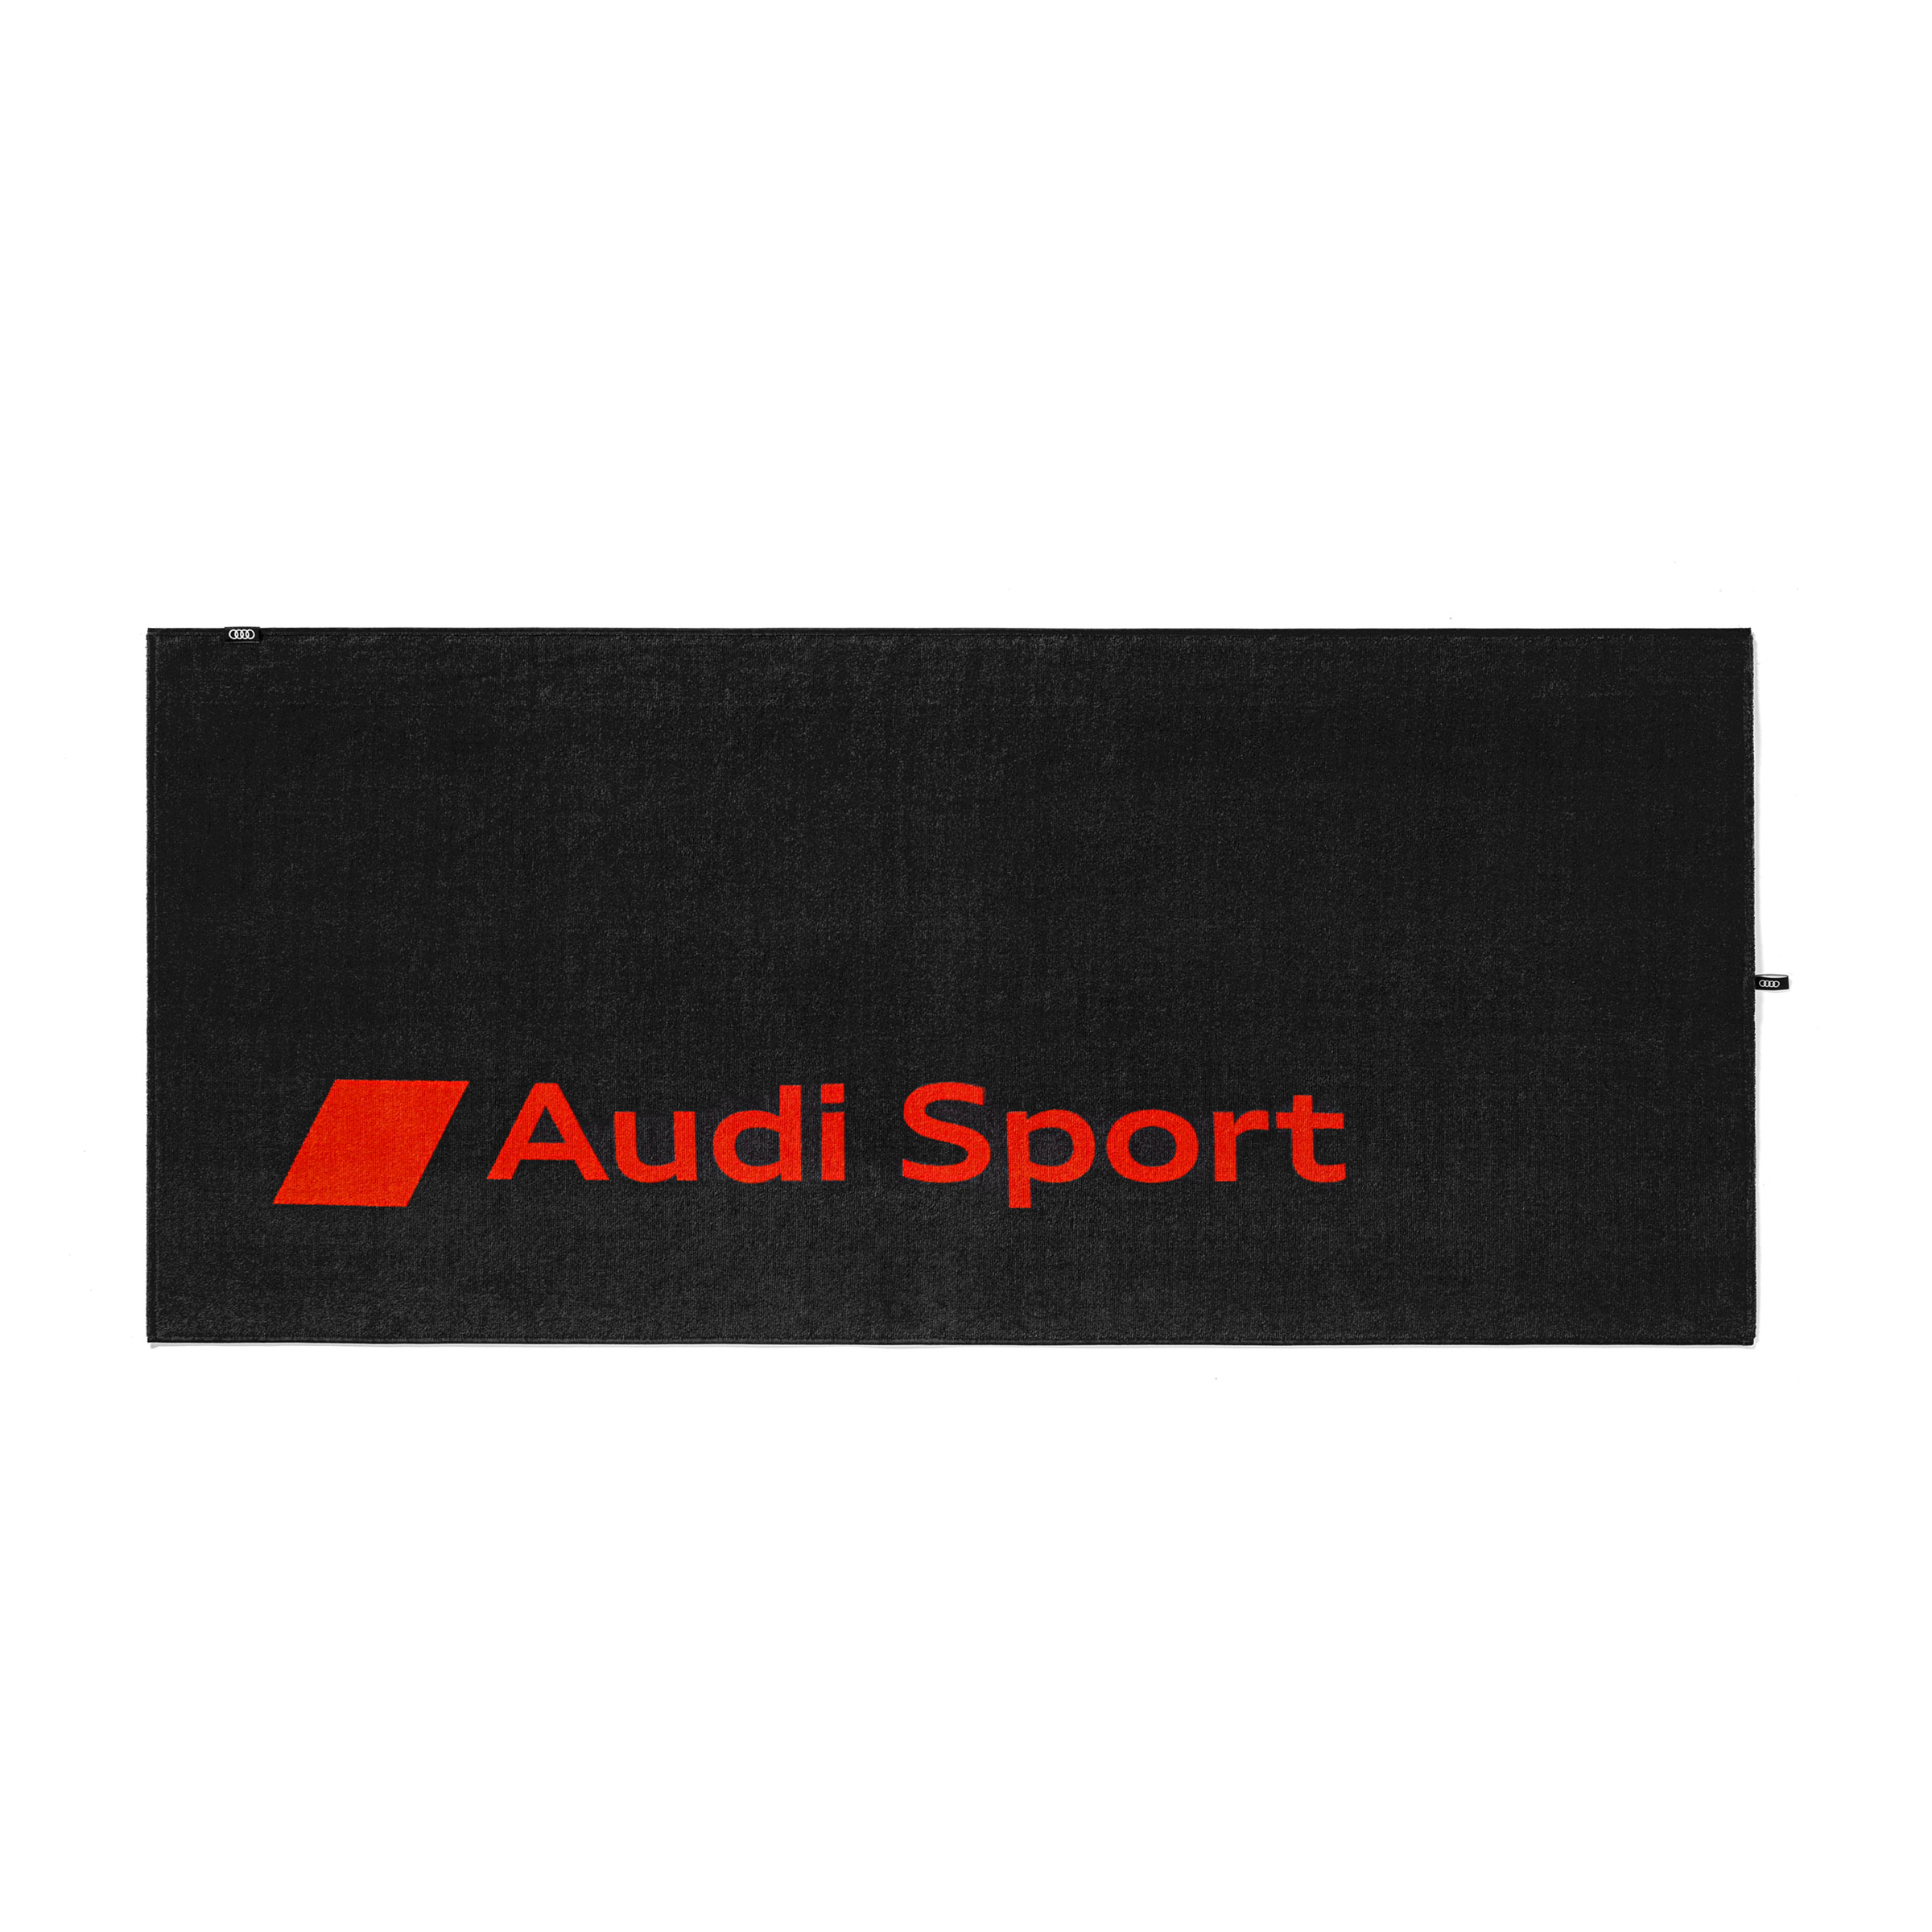 Original Audi Sport Strandlaken Badetuch dunkelgrau/rot 80x180cm Badehandtuch